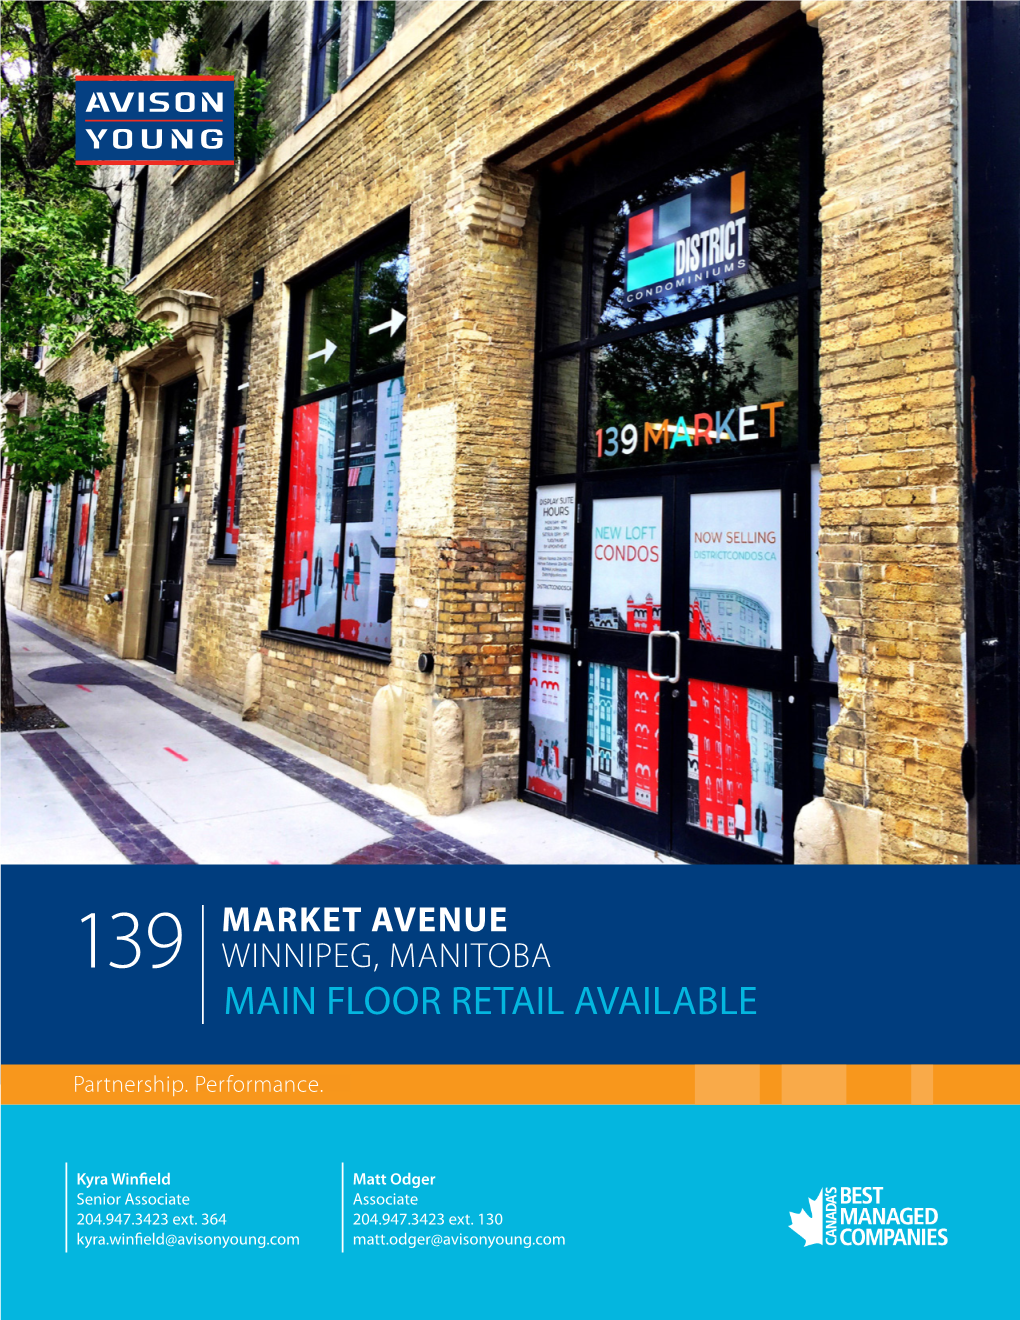 Market Avenue 139 Winnipeg, Manitoba Main Floor Retail Available